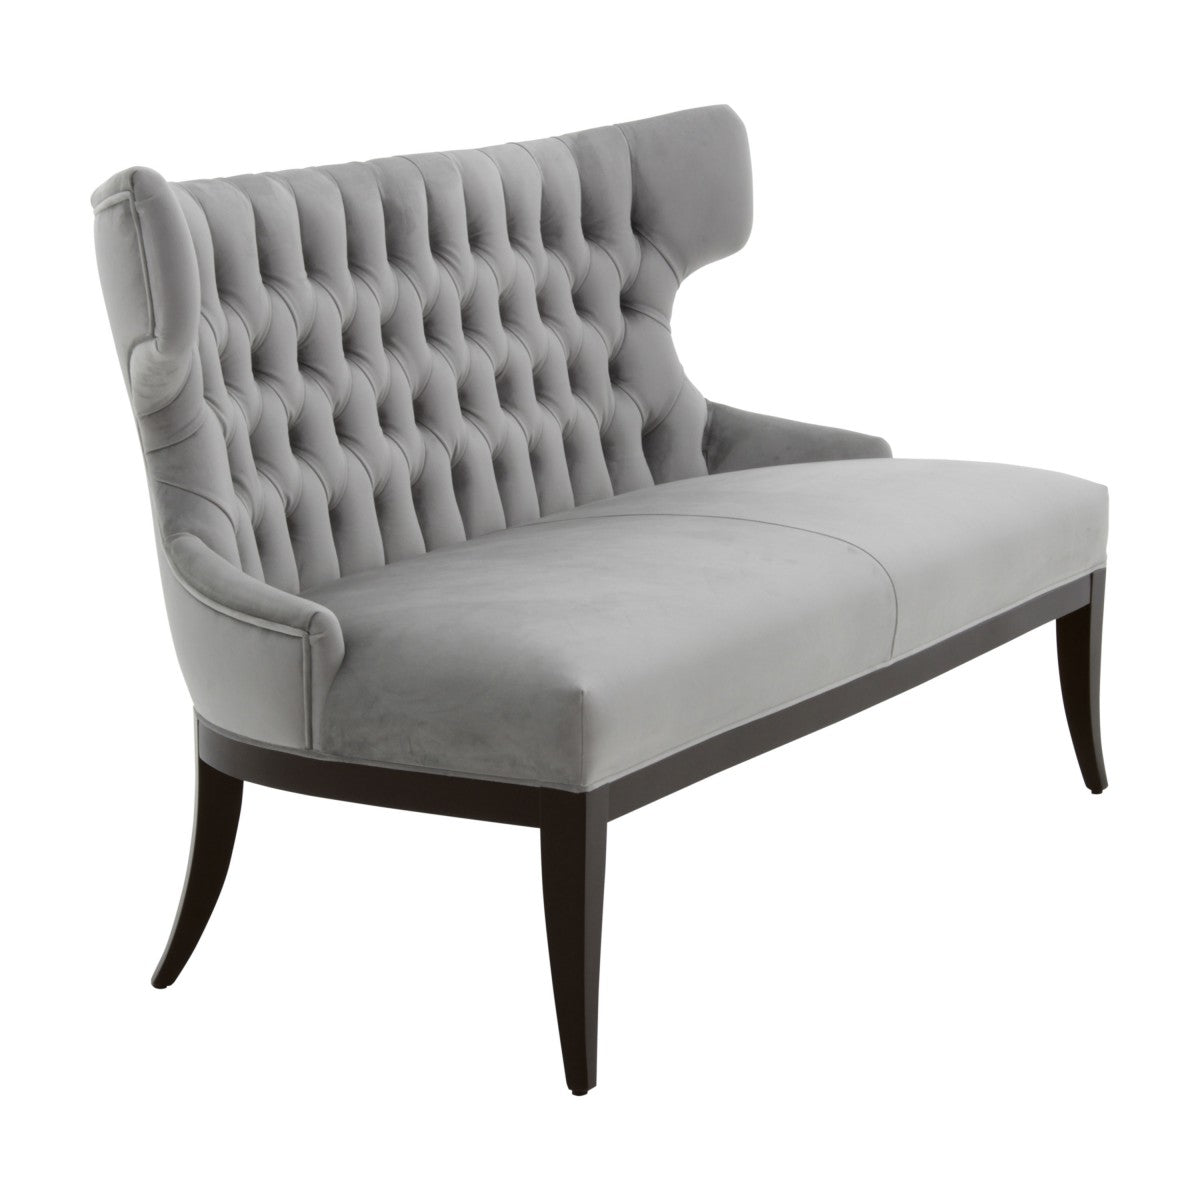 Irene Bespoke Upholstered Italian Contemporary Two Seater Sofa MS451D Custom Made To Order